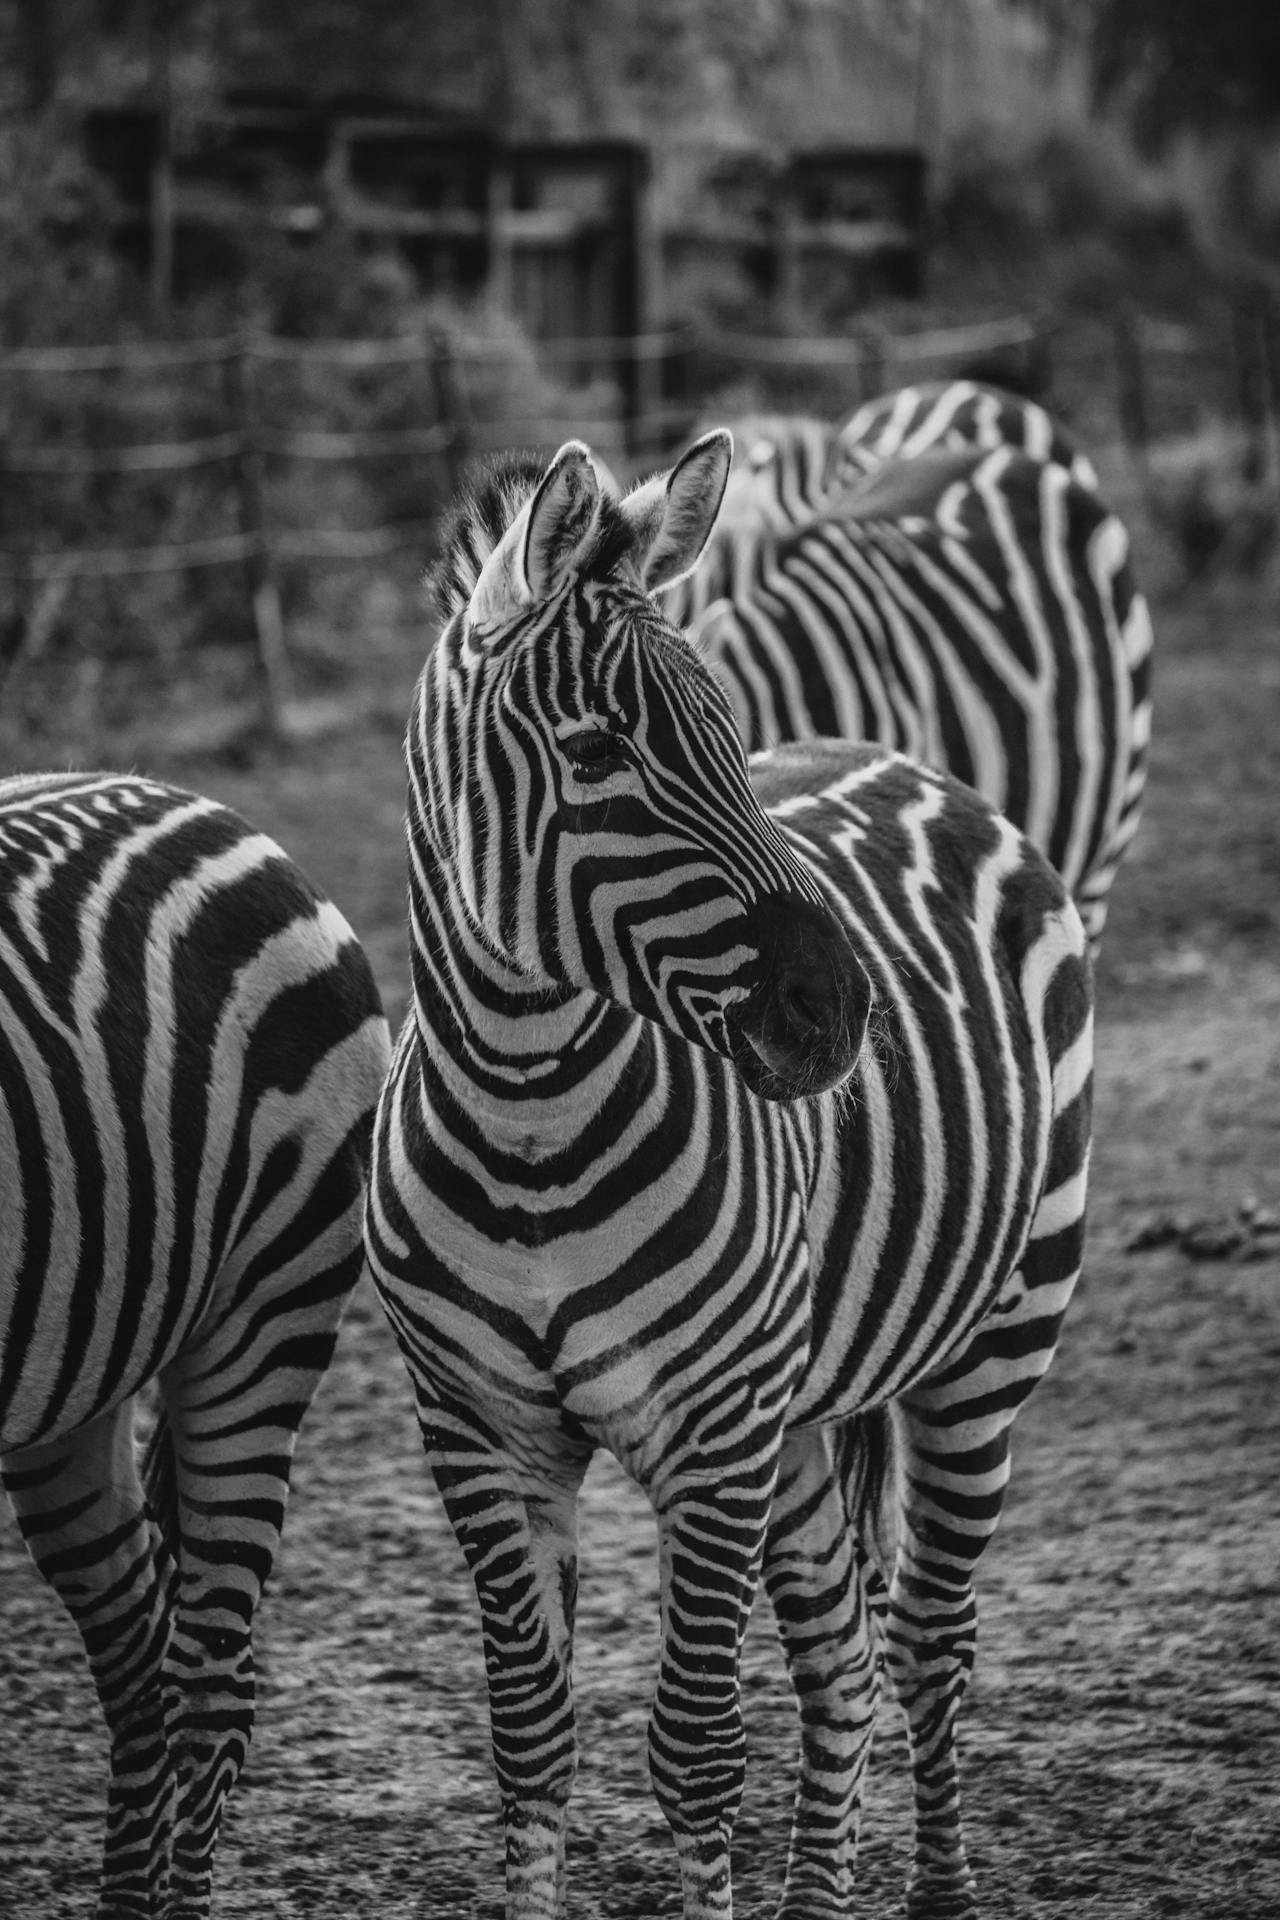 Zebras at the Dublin Zoo